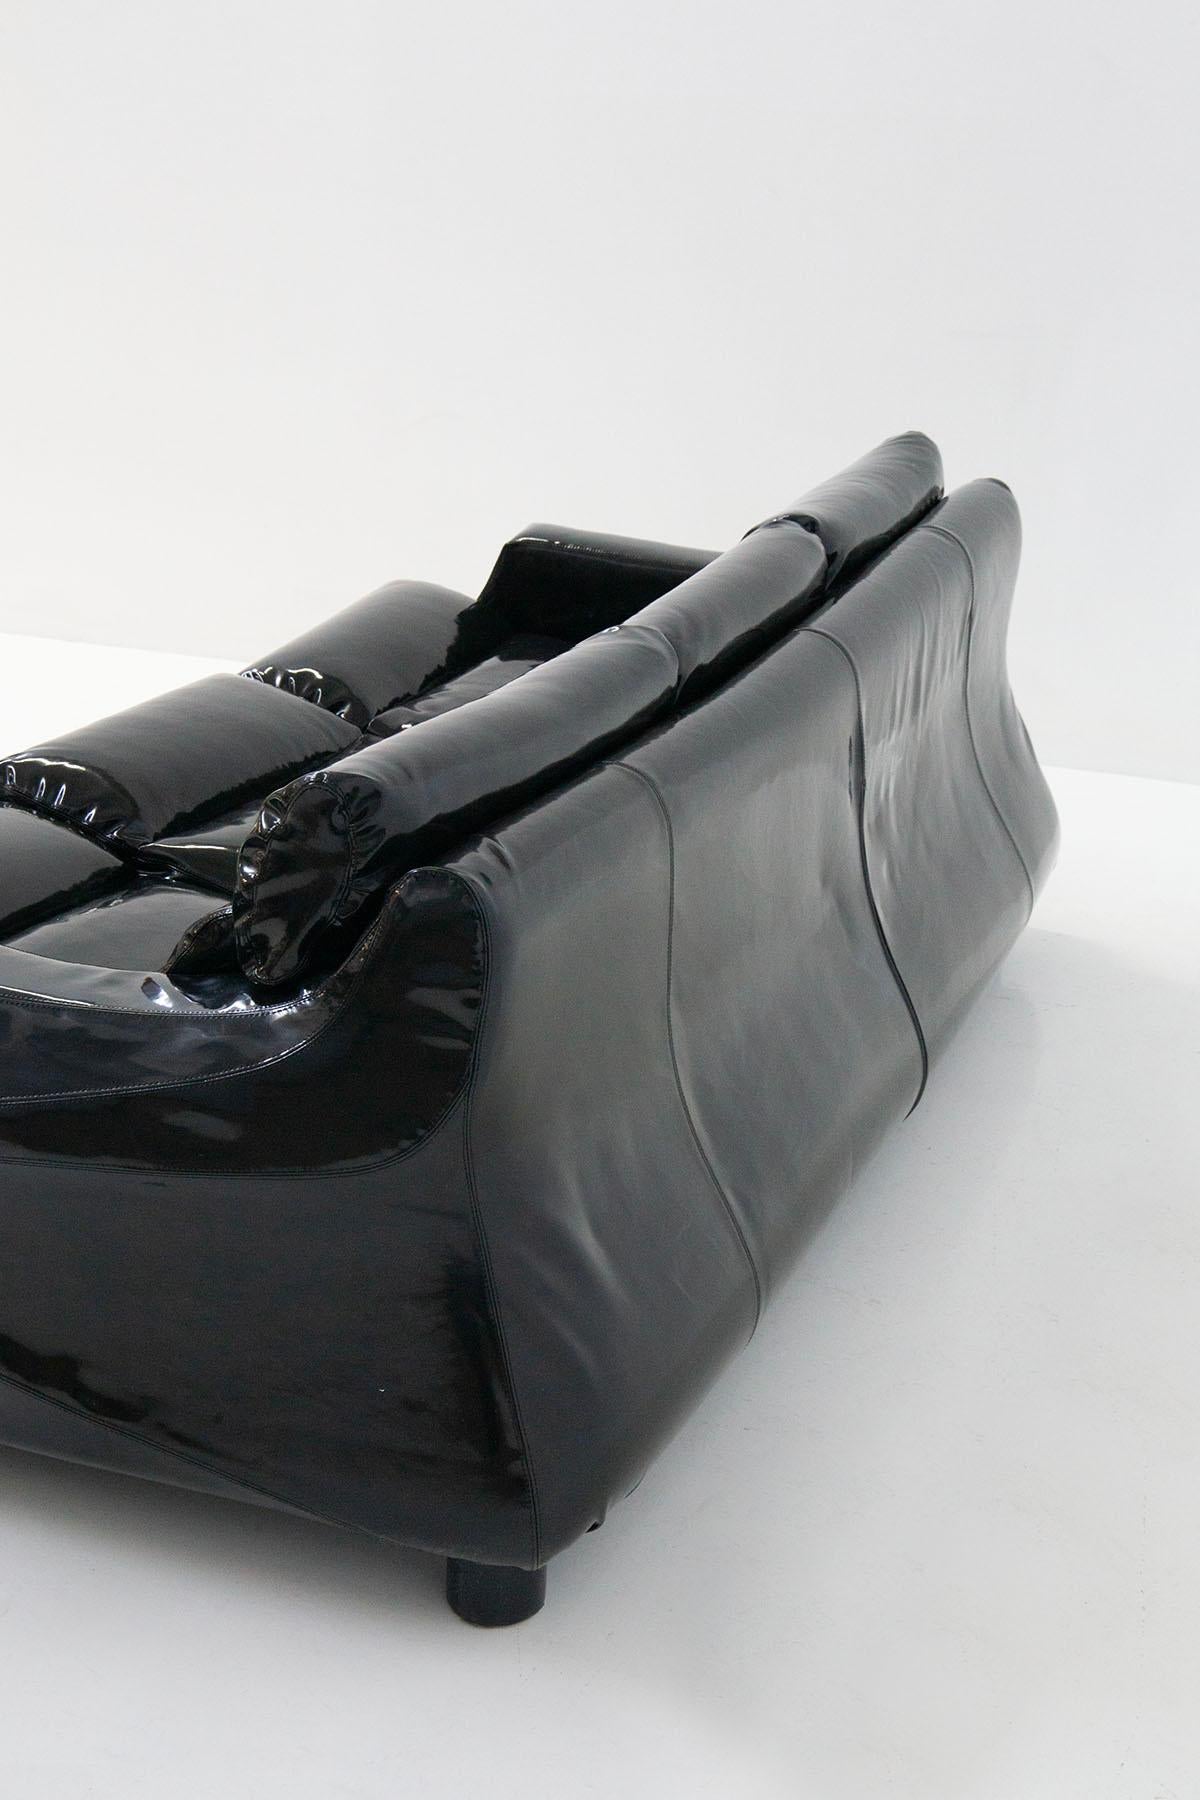 Mid-Century Sofa in black latex by Stasis Salotti 1